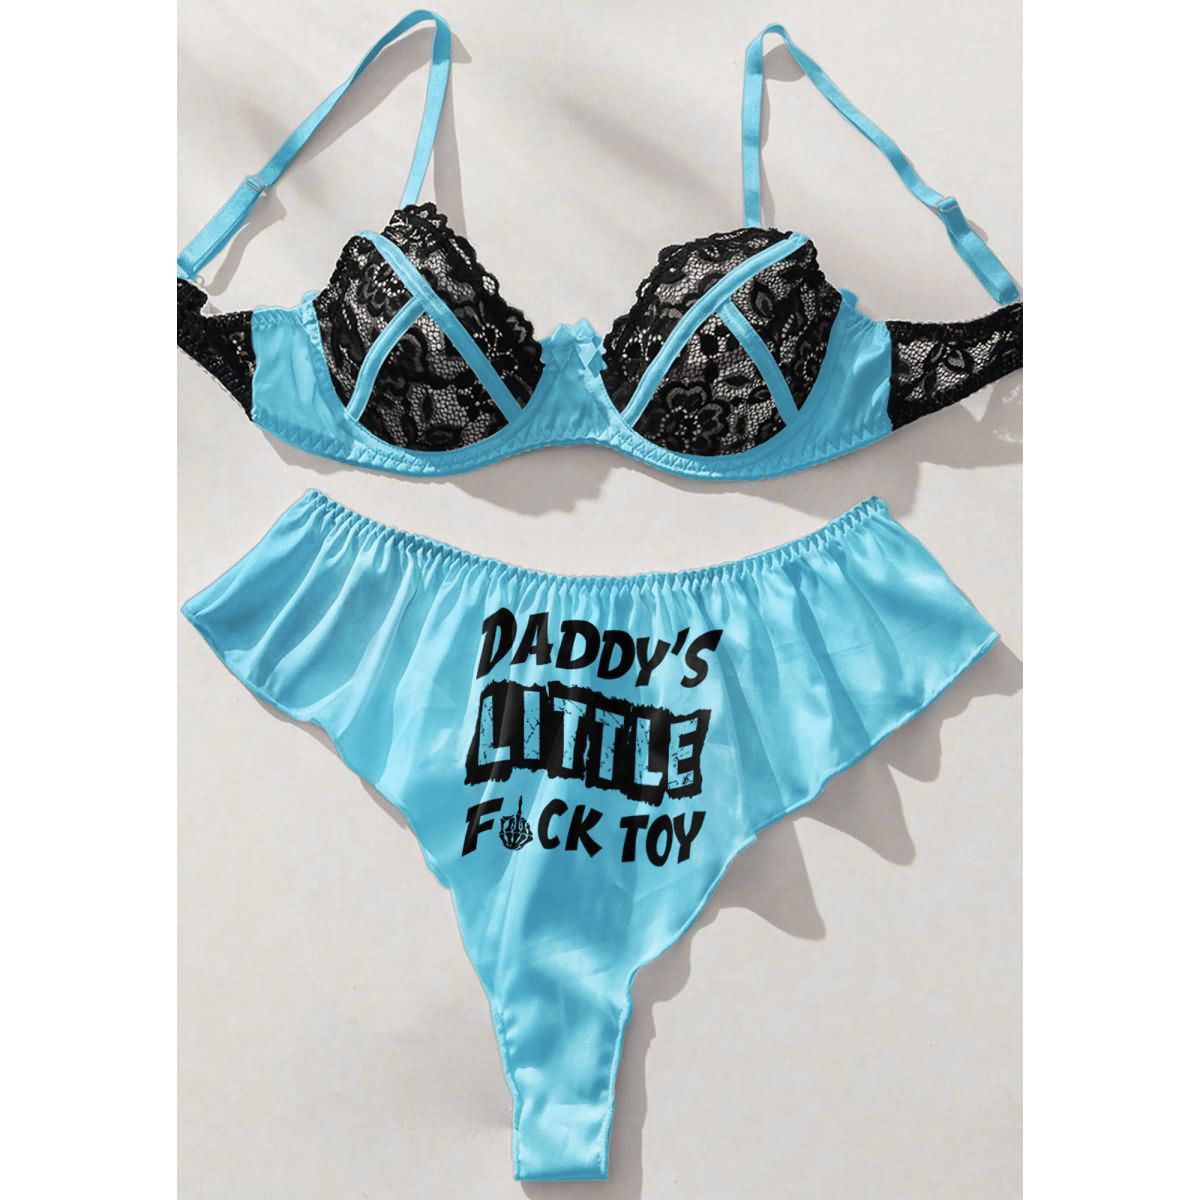 Women's Yes Daddy Printed Bra Briefs Underwear Set Naughty Swimsuit  Beachwear